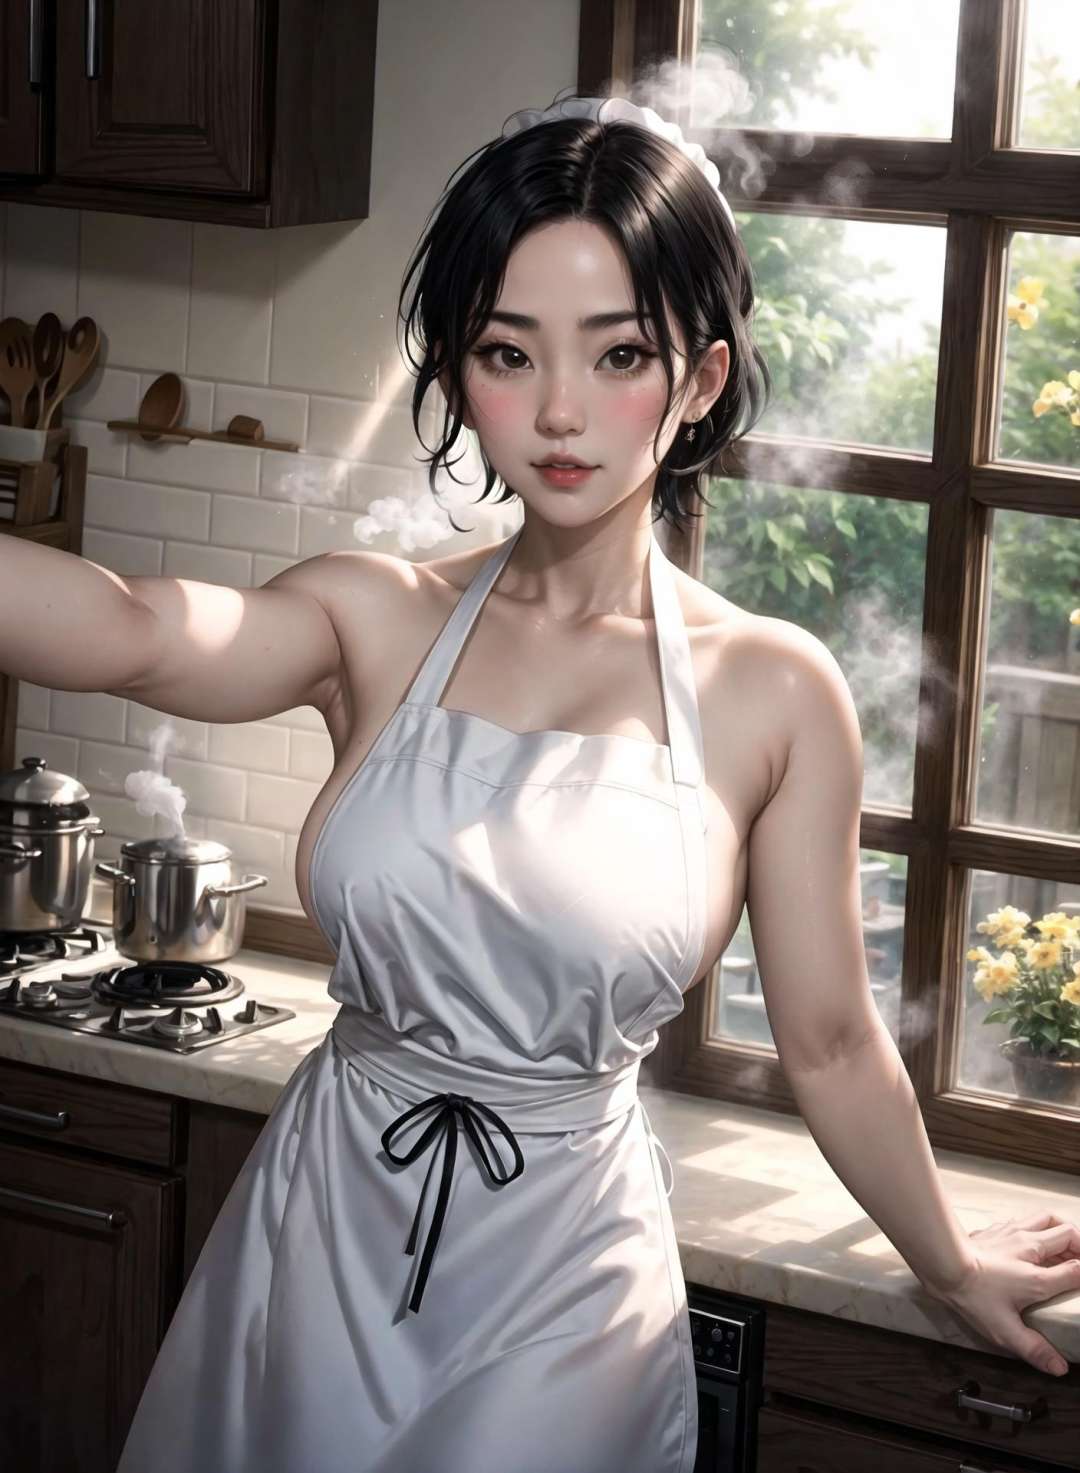 nijistyle, pov selfie, portrait of beautiful milf in white apron, bare shoulders, short black hair, kitchen, window, steam